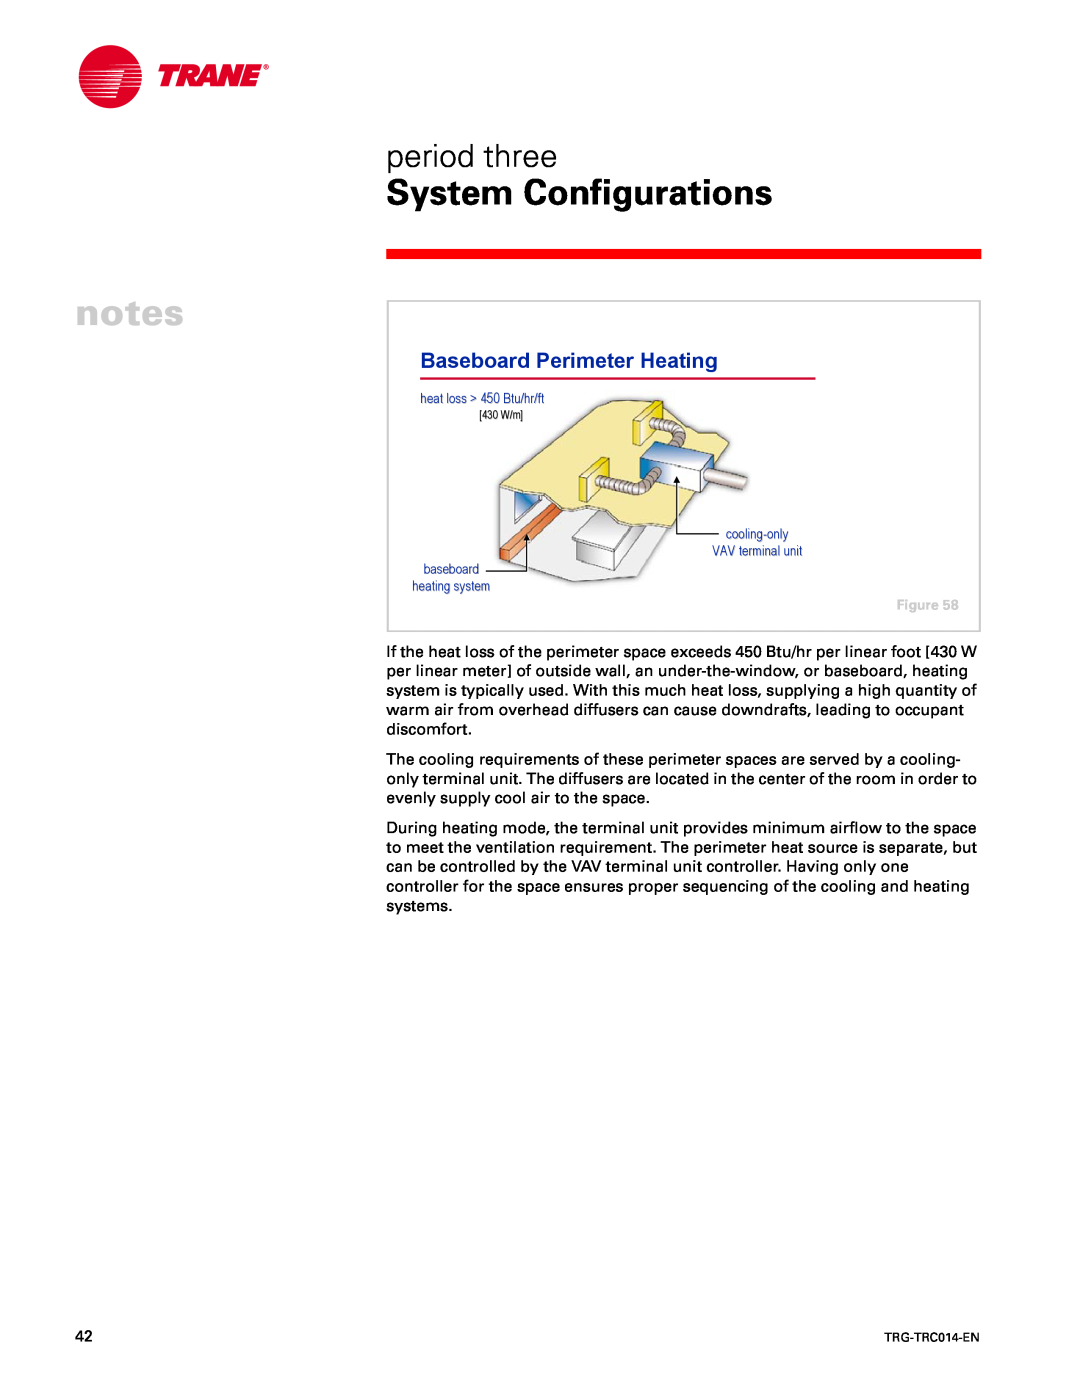 Trane TRG-TRC014-EN manual Baseboard Perimeter Heating, System Configurations, period three, heat loss 450 Btu/hr/ft 